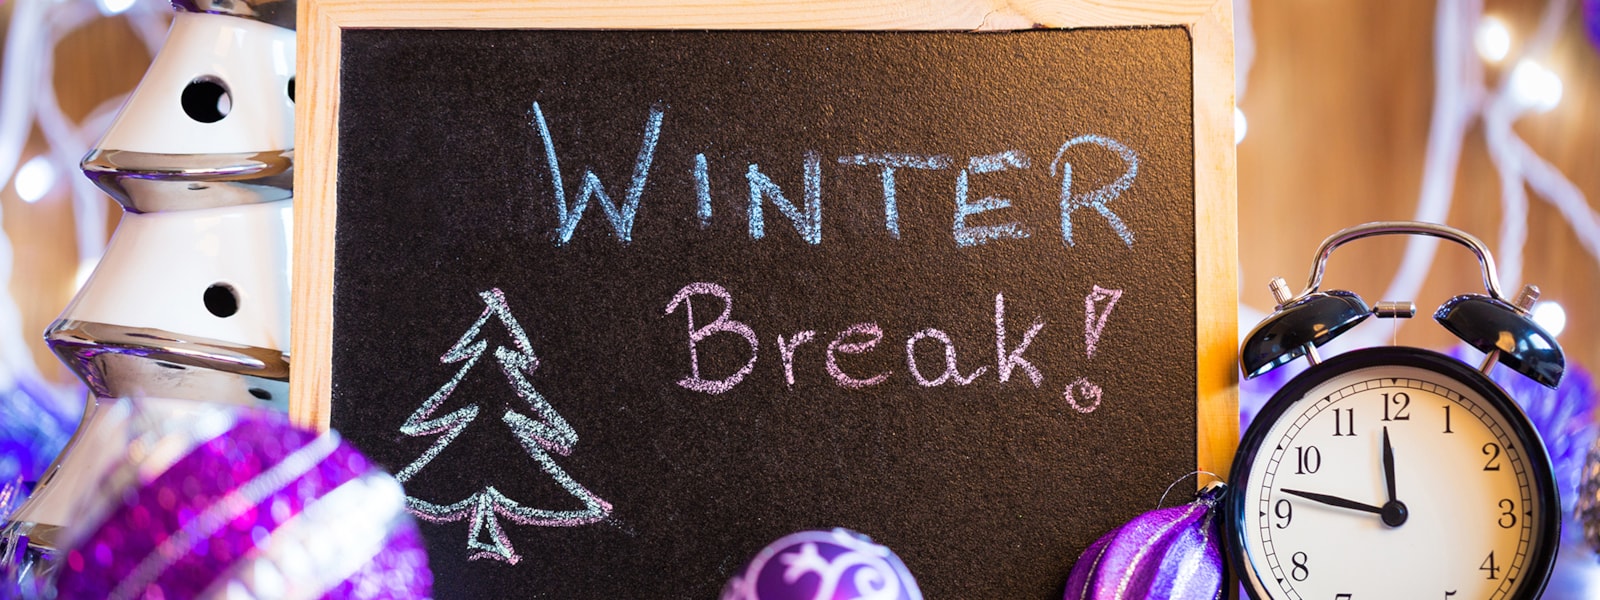 winter break! on chalkboard next to purple ornaments and an alarm clock